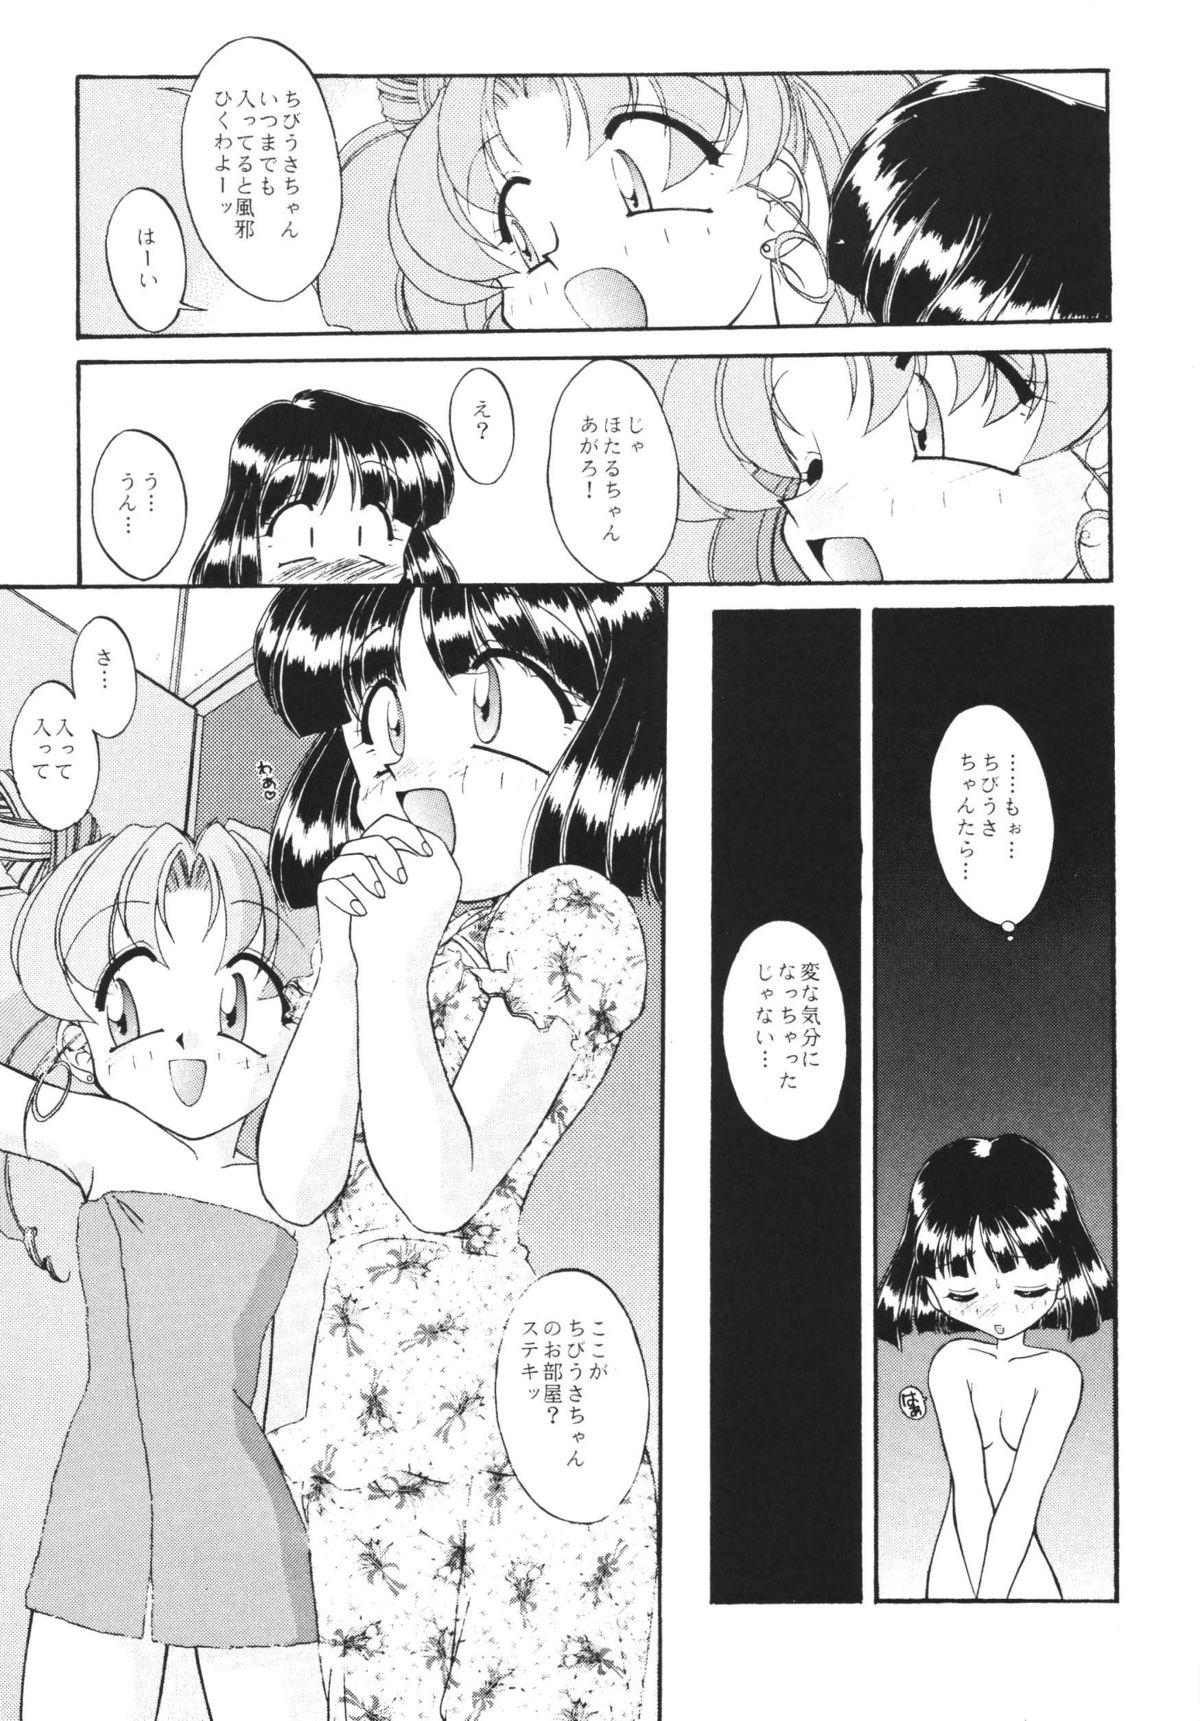 Japan MOON MEMORIES Vol. 2 - Sailor moon Sola - Page 7